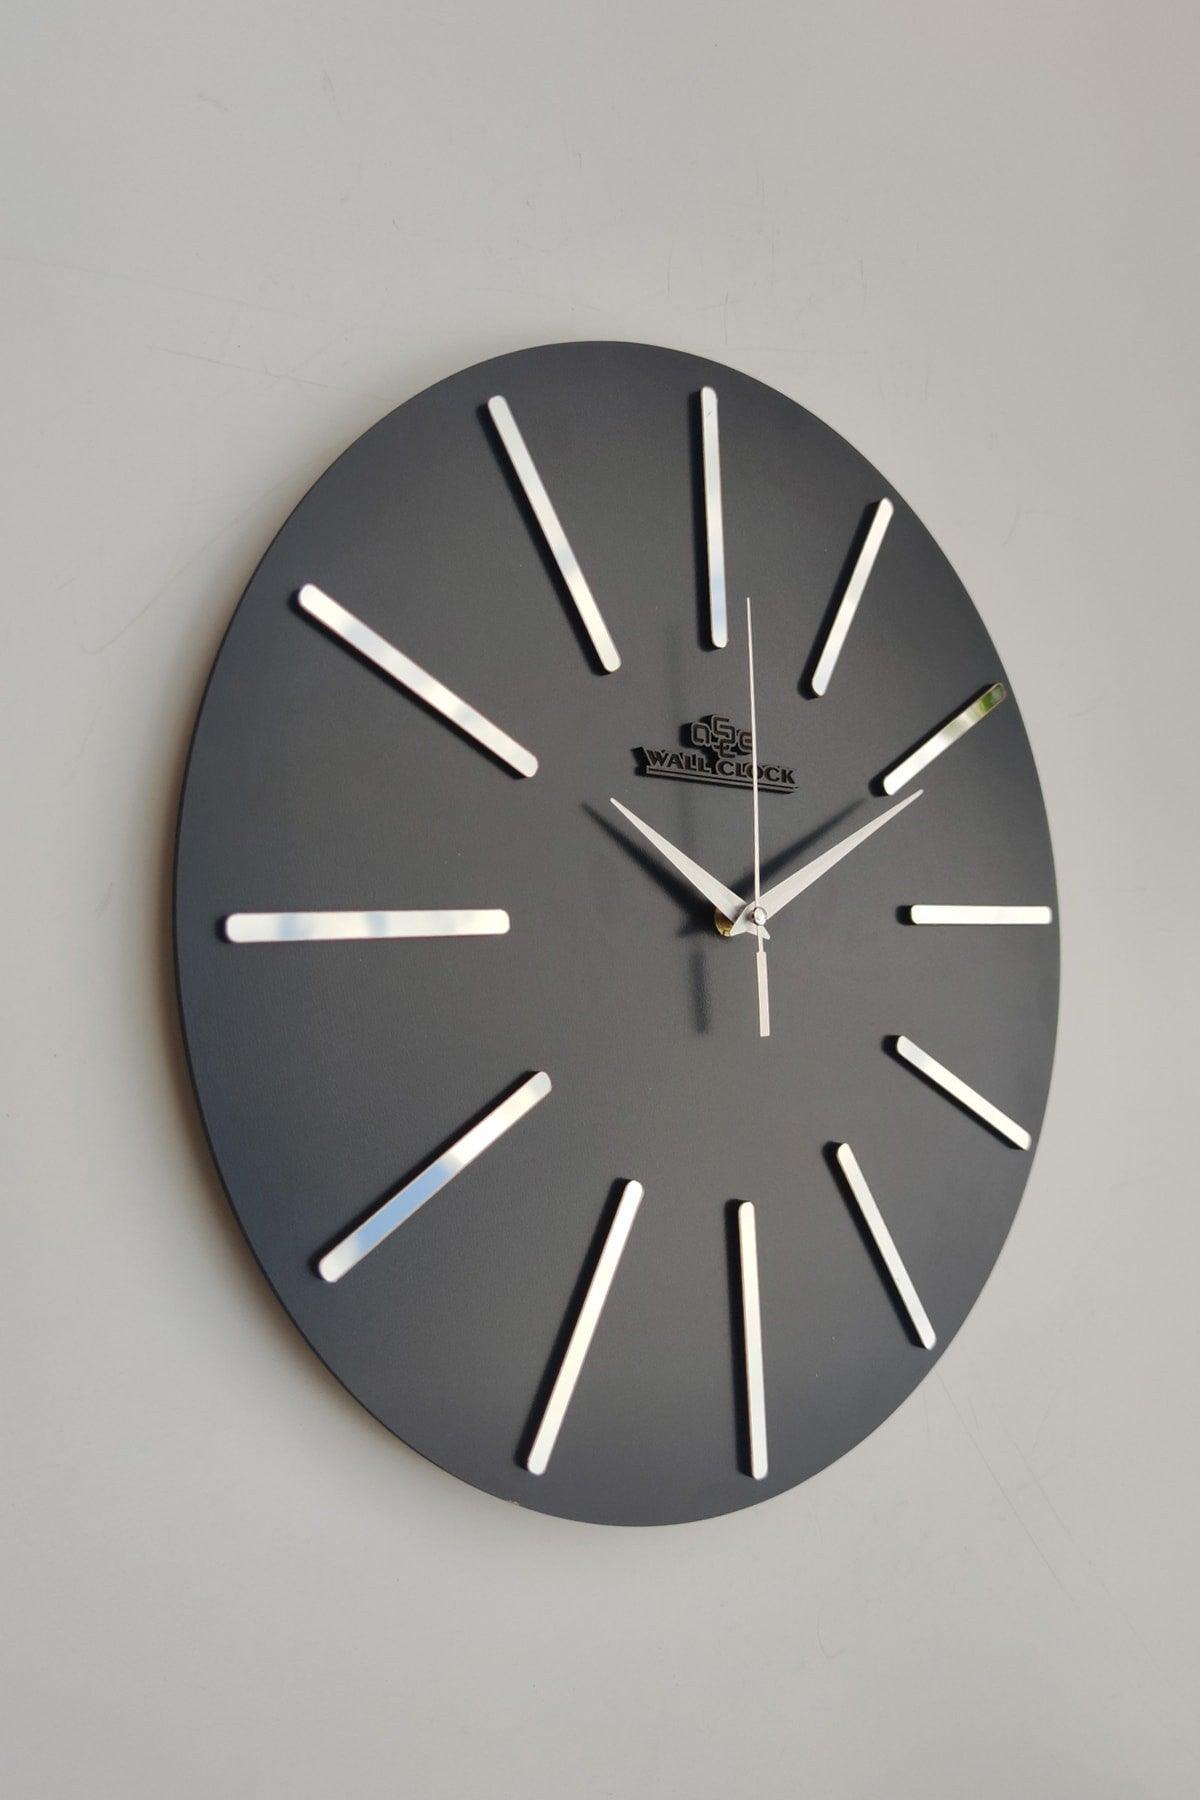 Special Decorative Mirrored Wall Clock Black & Silver Silent Mechanism 37x37cm - Swordslife